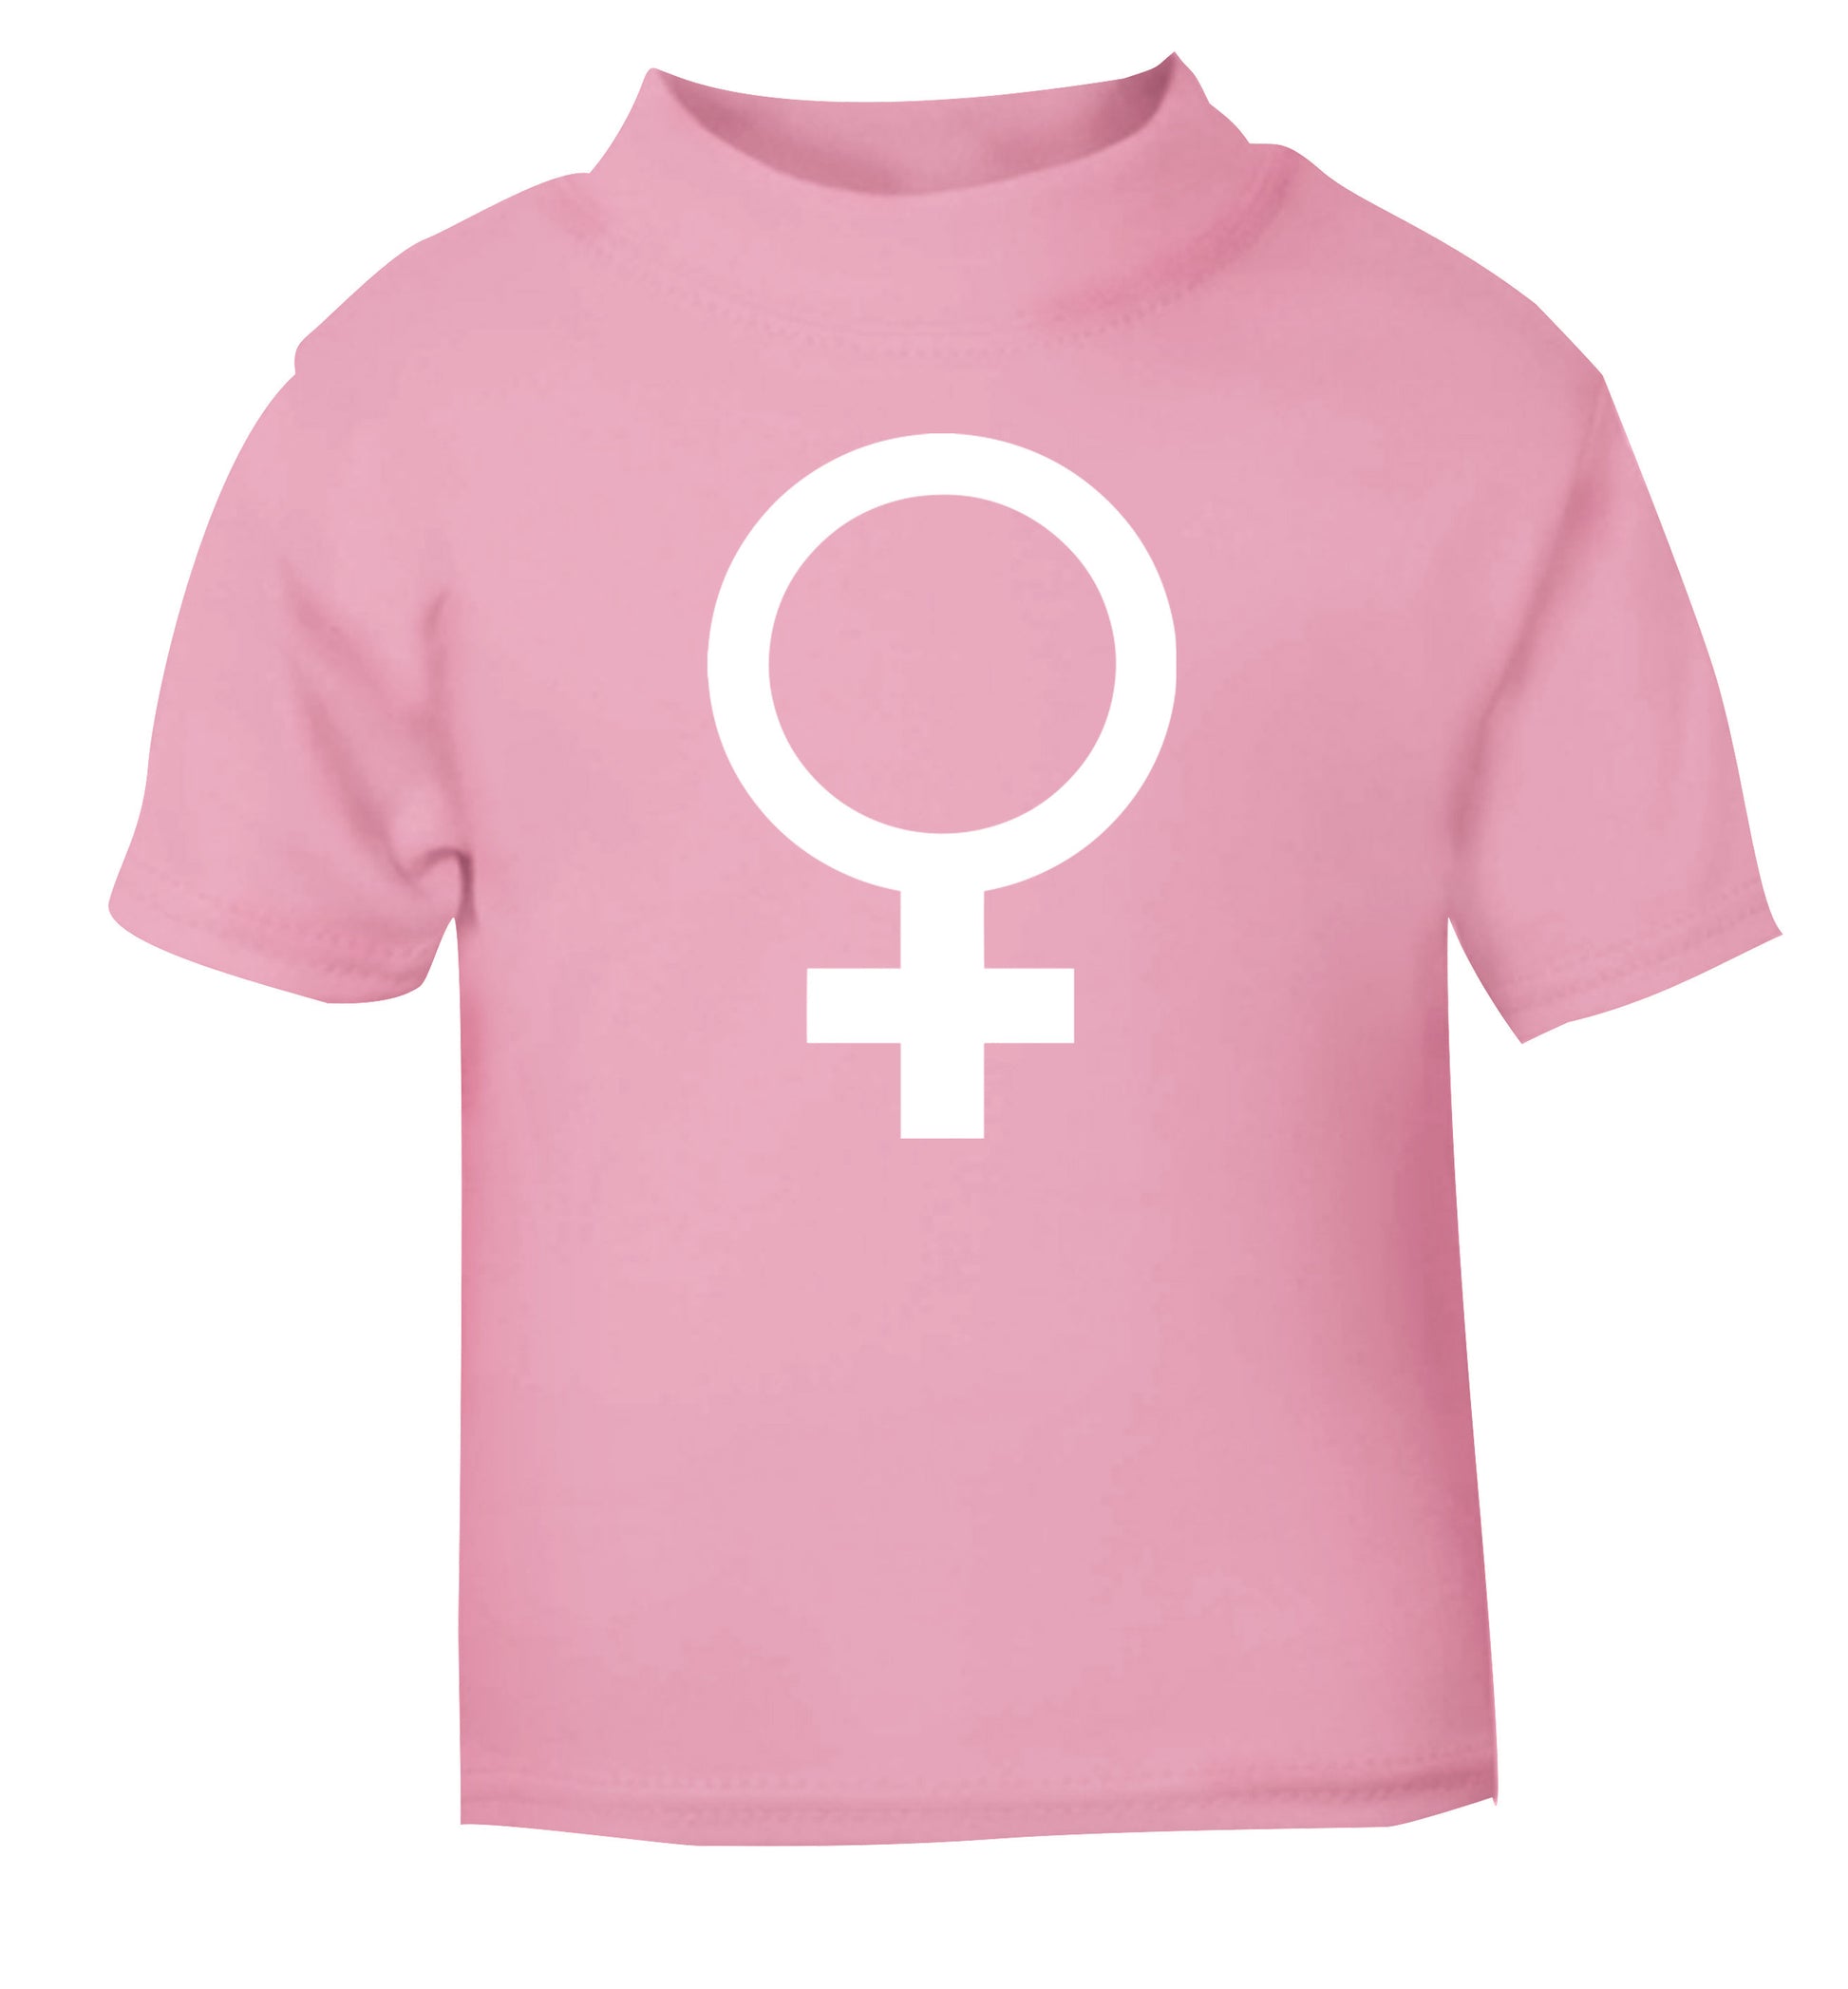 Female symbol large light pink Baby Toddler Tshirt 2 Years